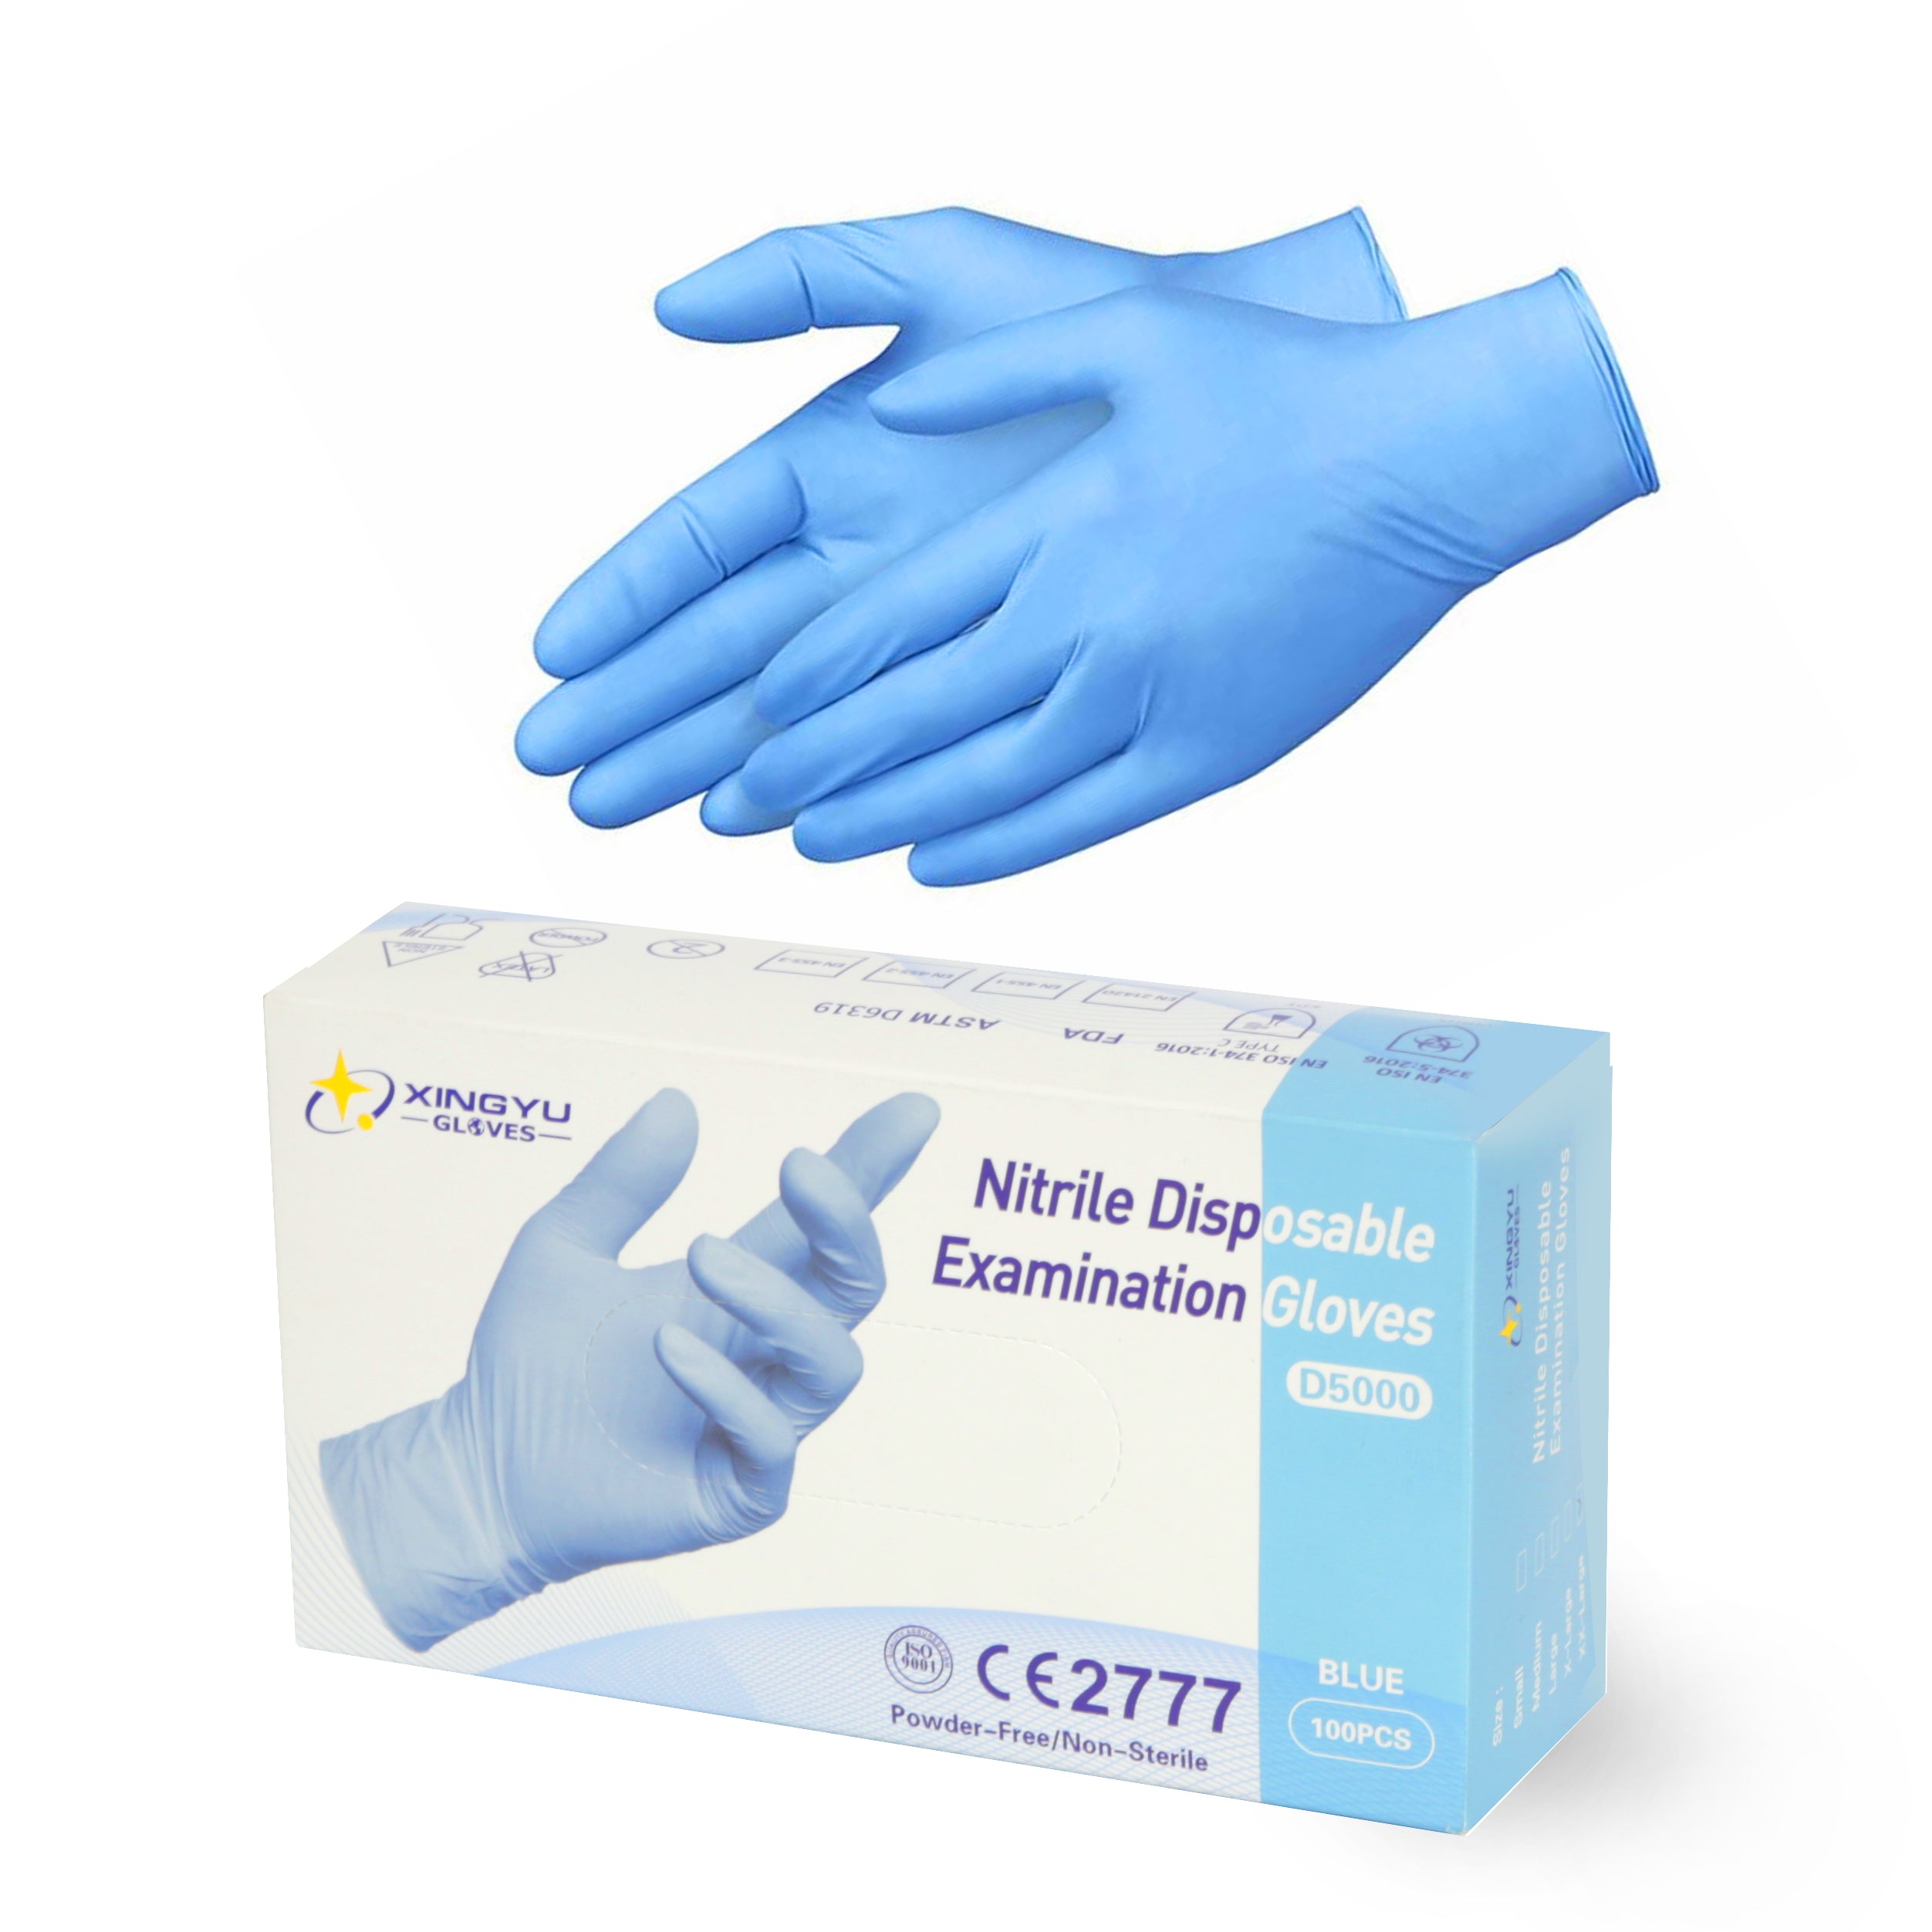 Xingyu Nitrile Disposable Examination Gloves Blue XX-Large - 100 Pack